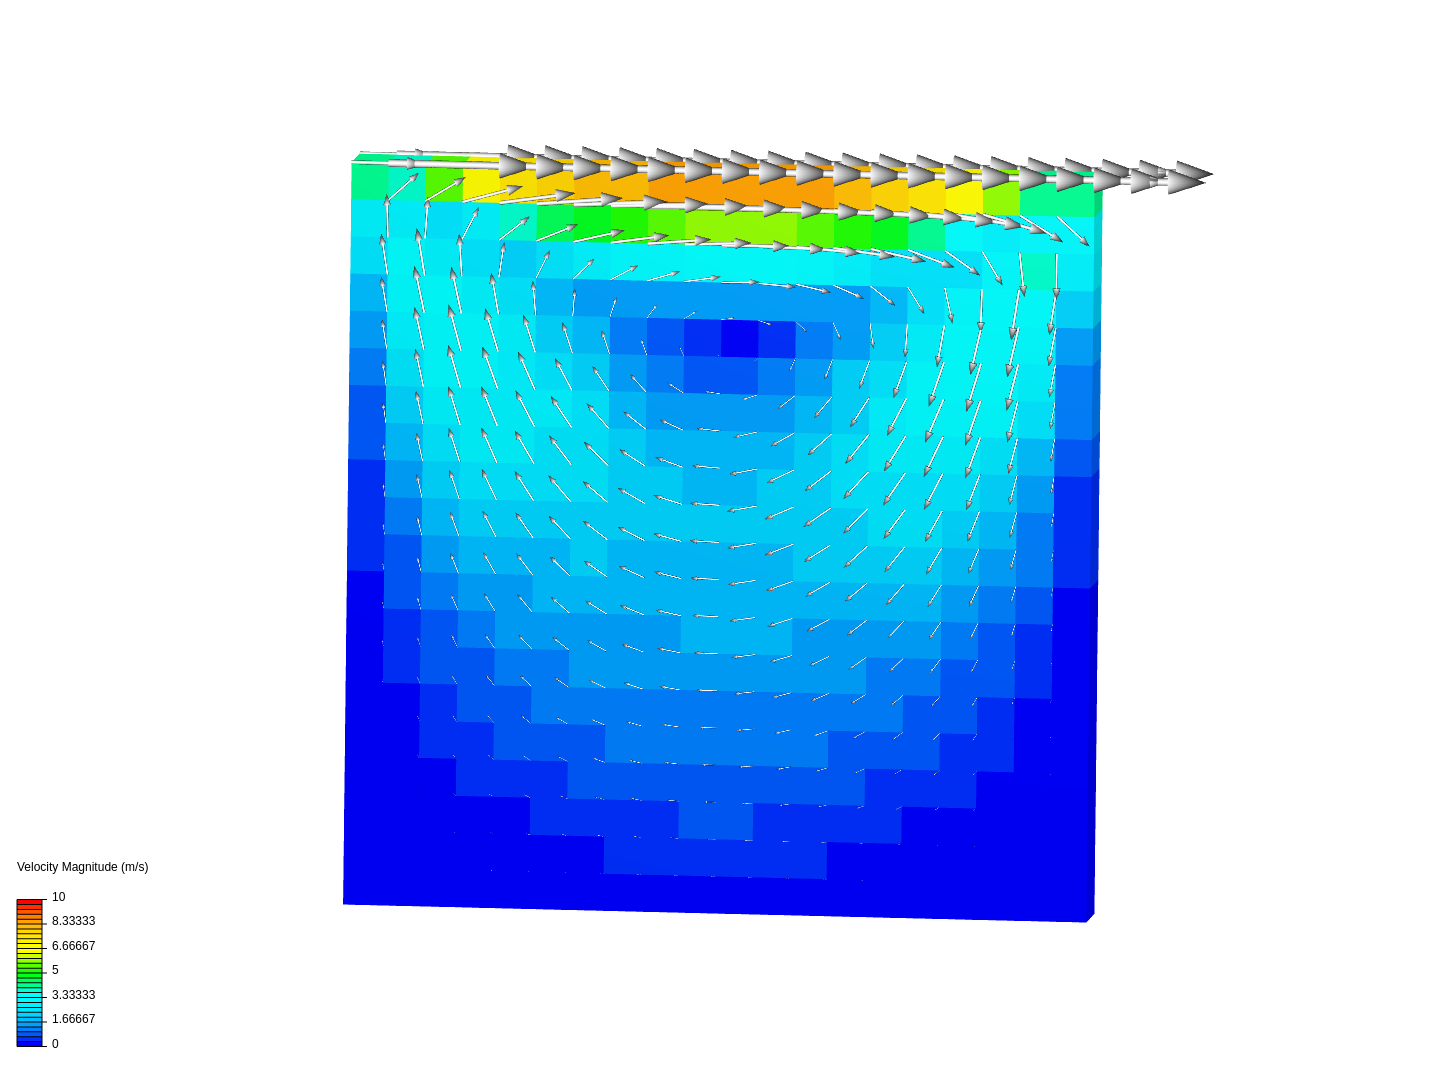 lid-drivencavity image